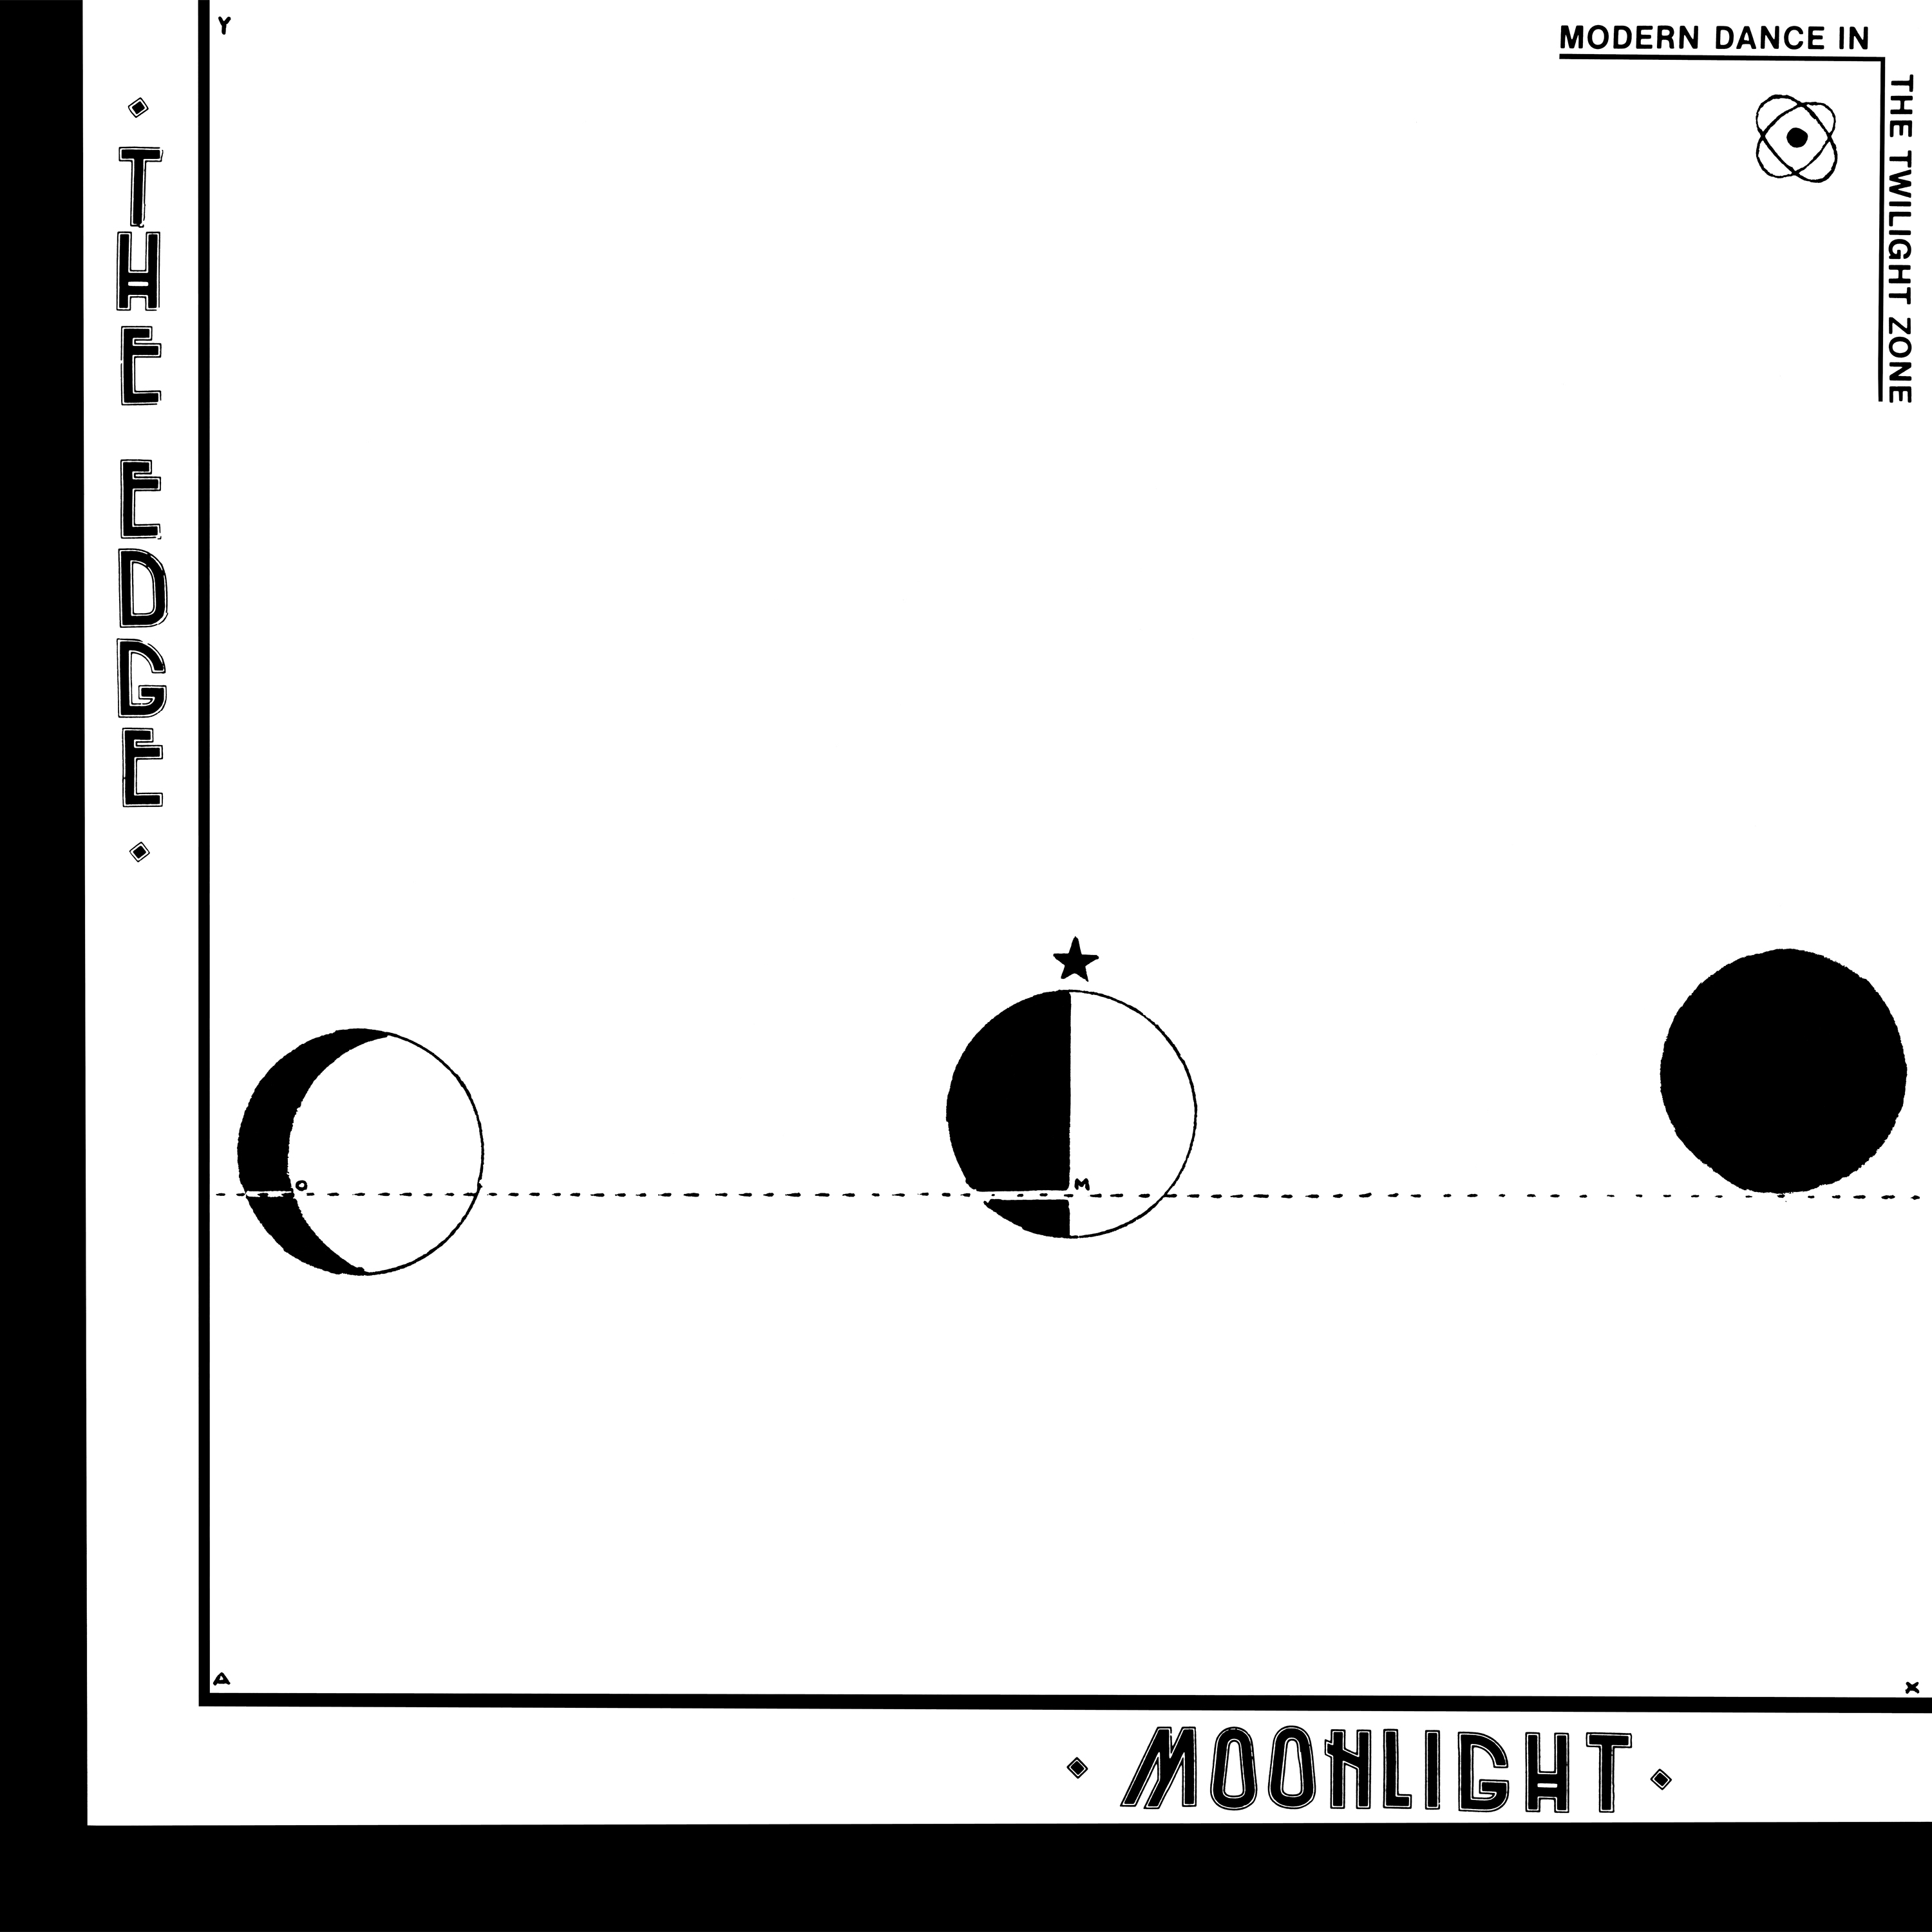 Moonlight - The Edge - CD